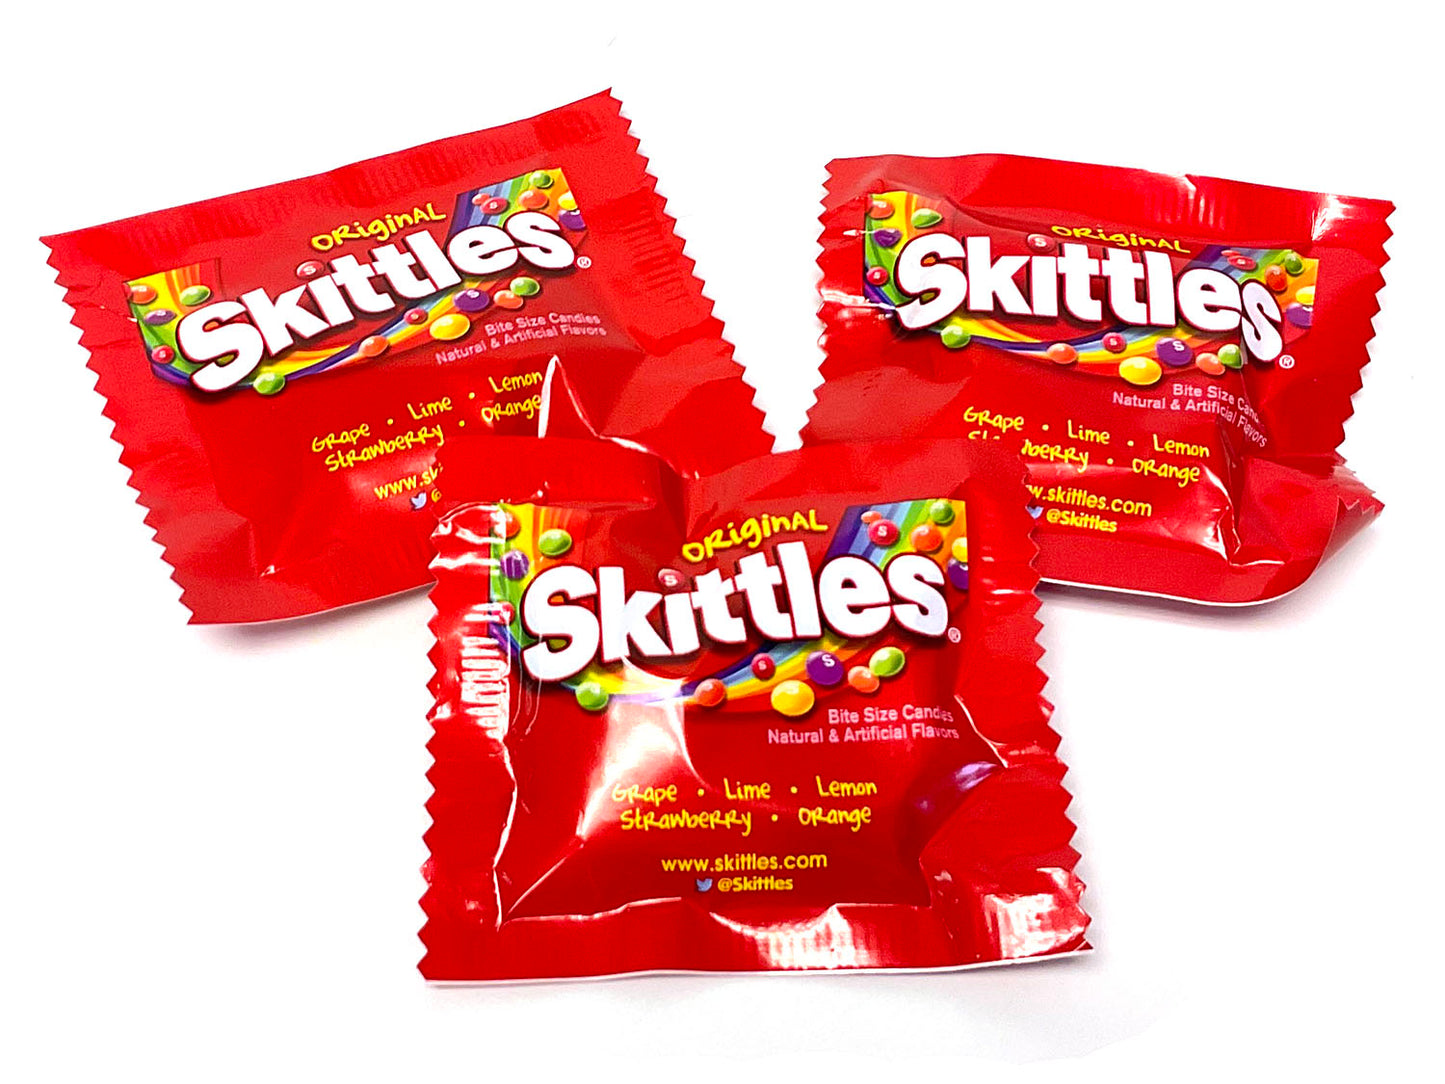 Skittles Sour Bite Size Candies - 1.8-oz. Bag